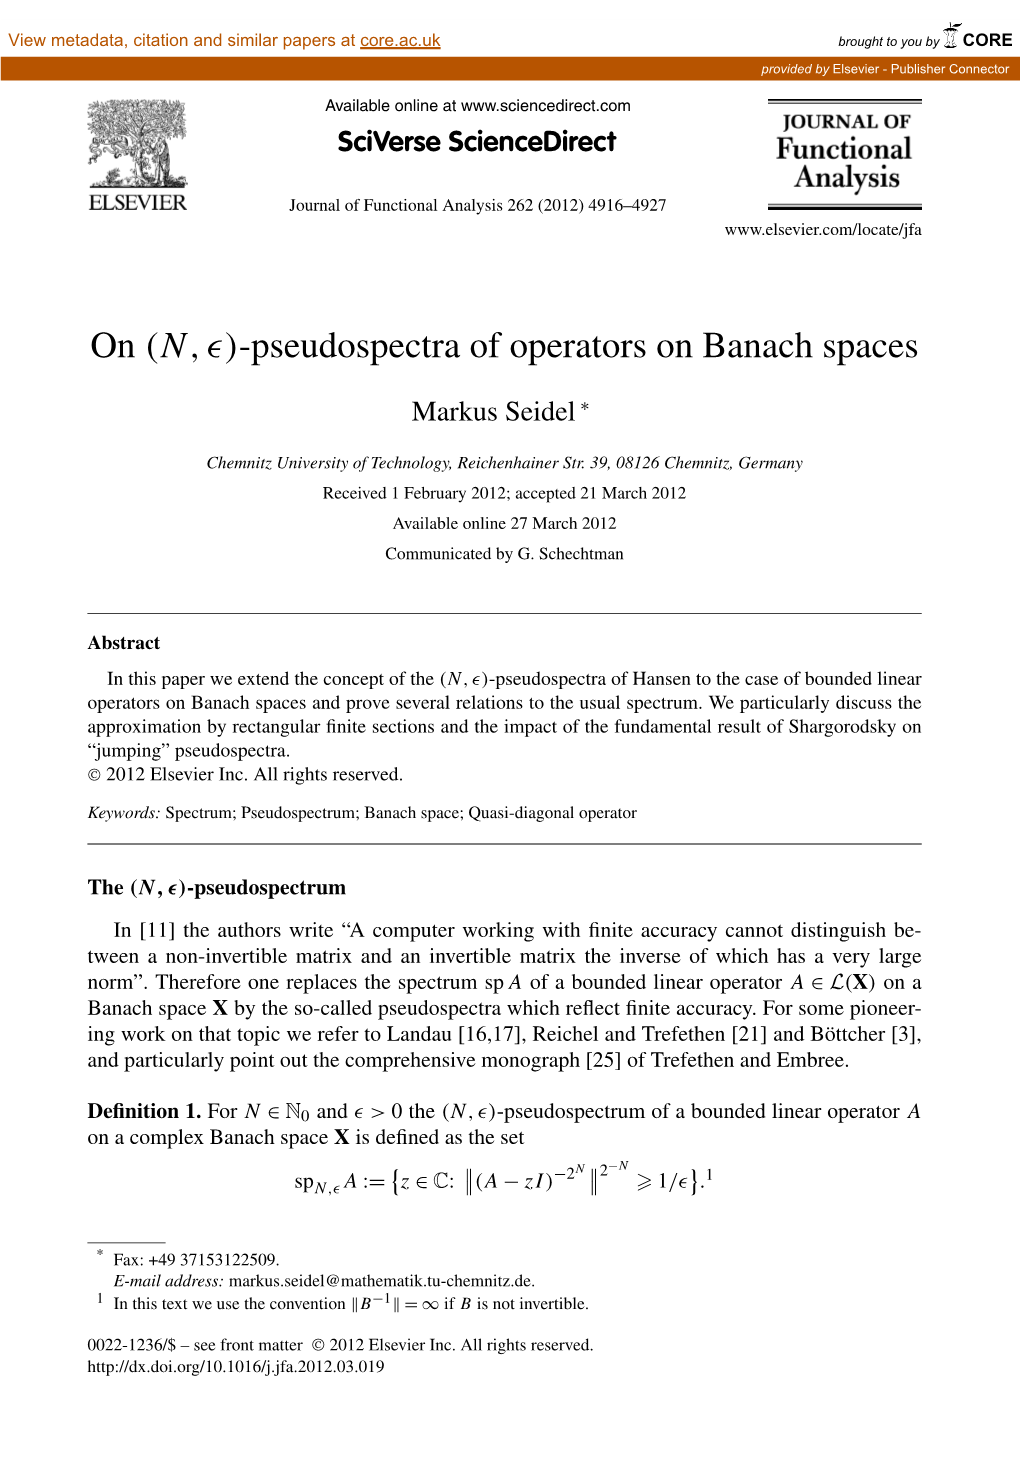 Pseudospectra of Operators on Banach Spaces